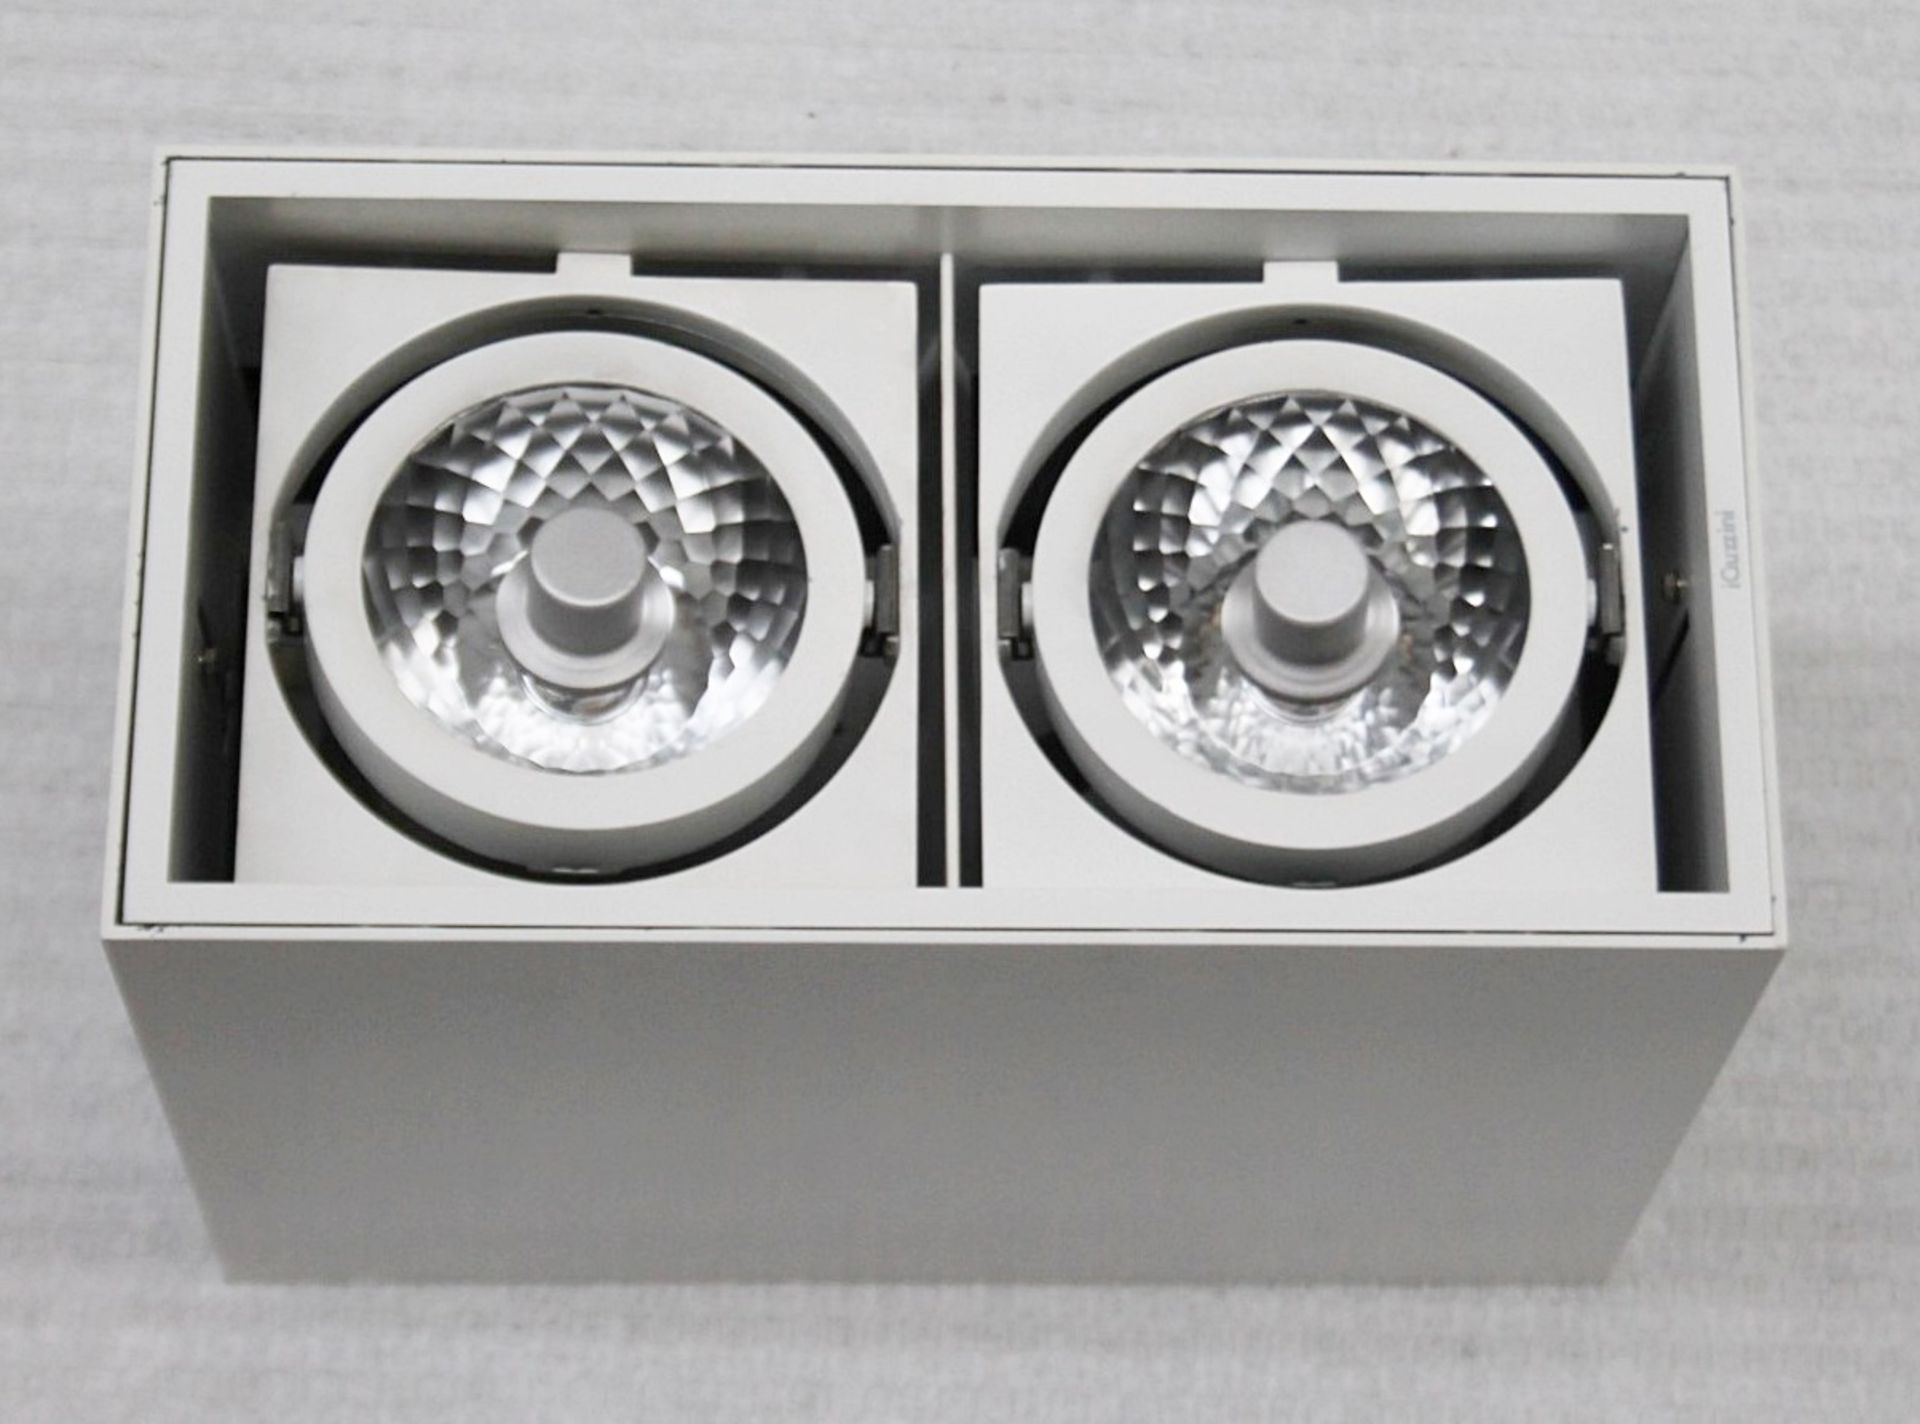 4 x IGUZZINI Commercial Twin Directional Gimble Spot Light Fittings In Metal Casings (5326)